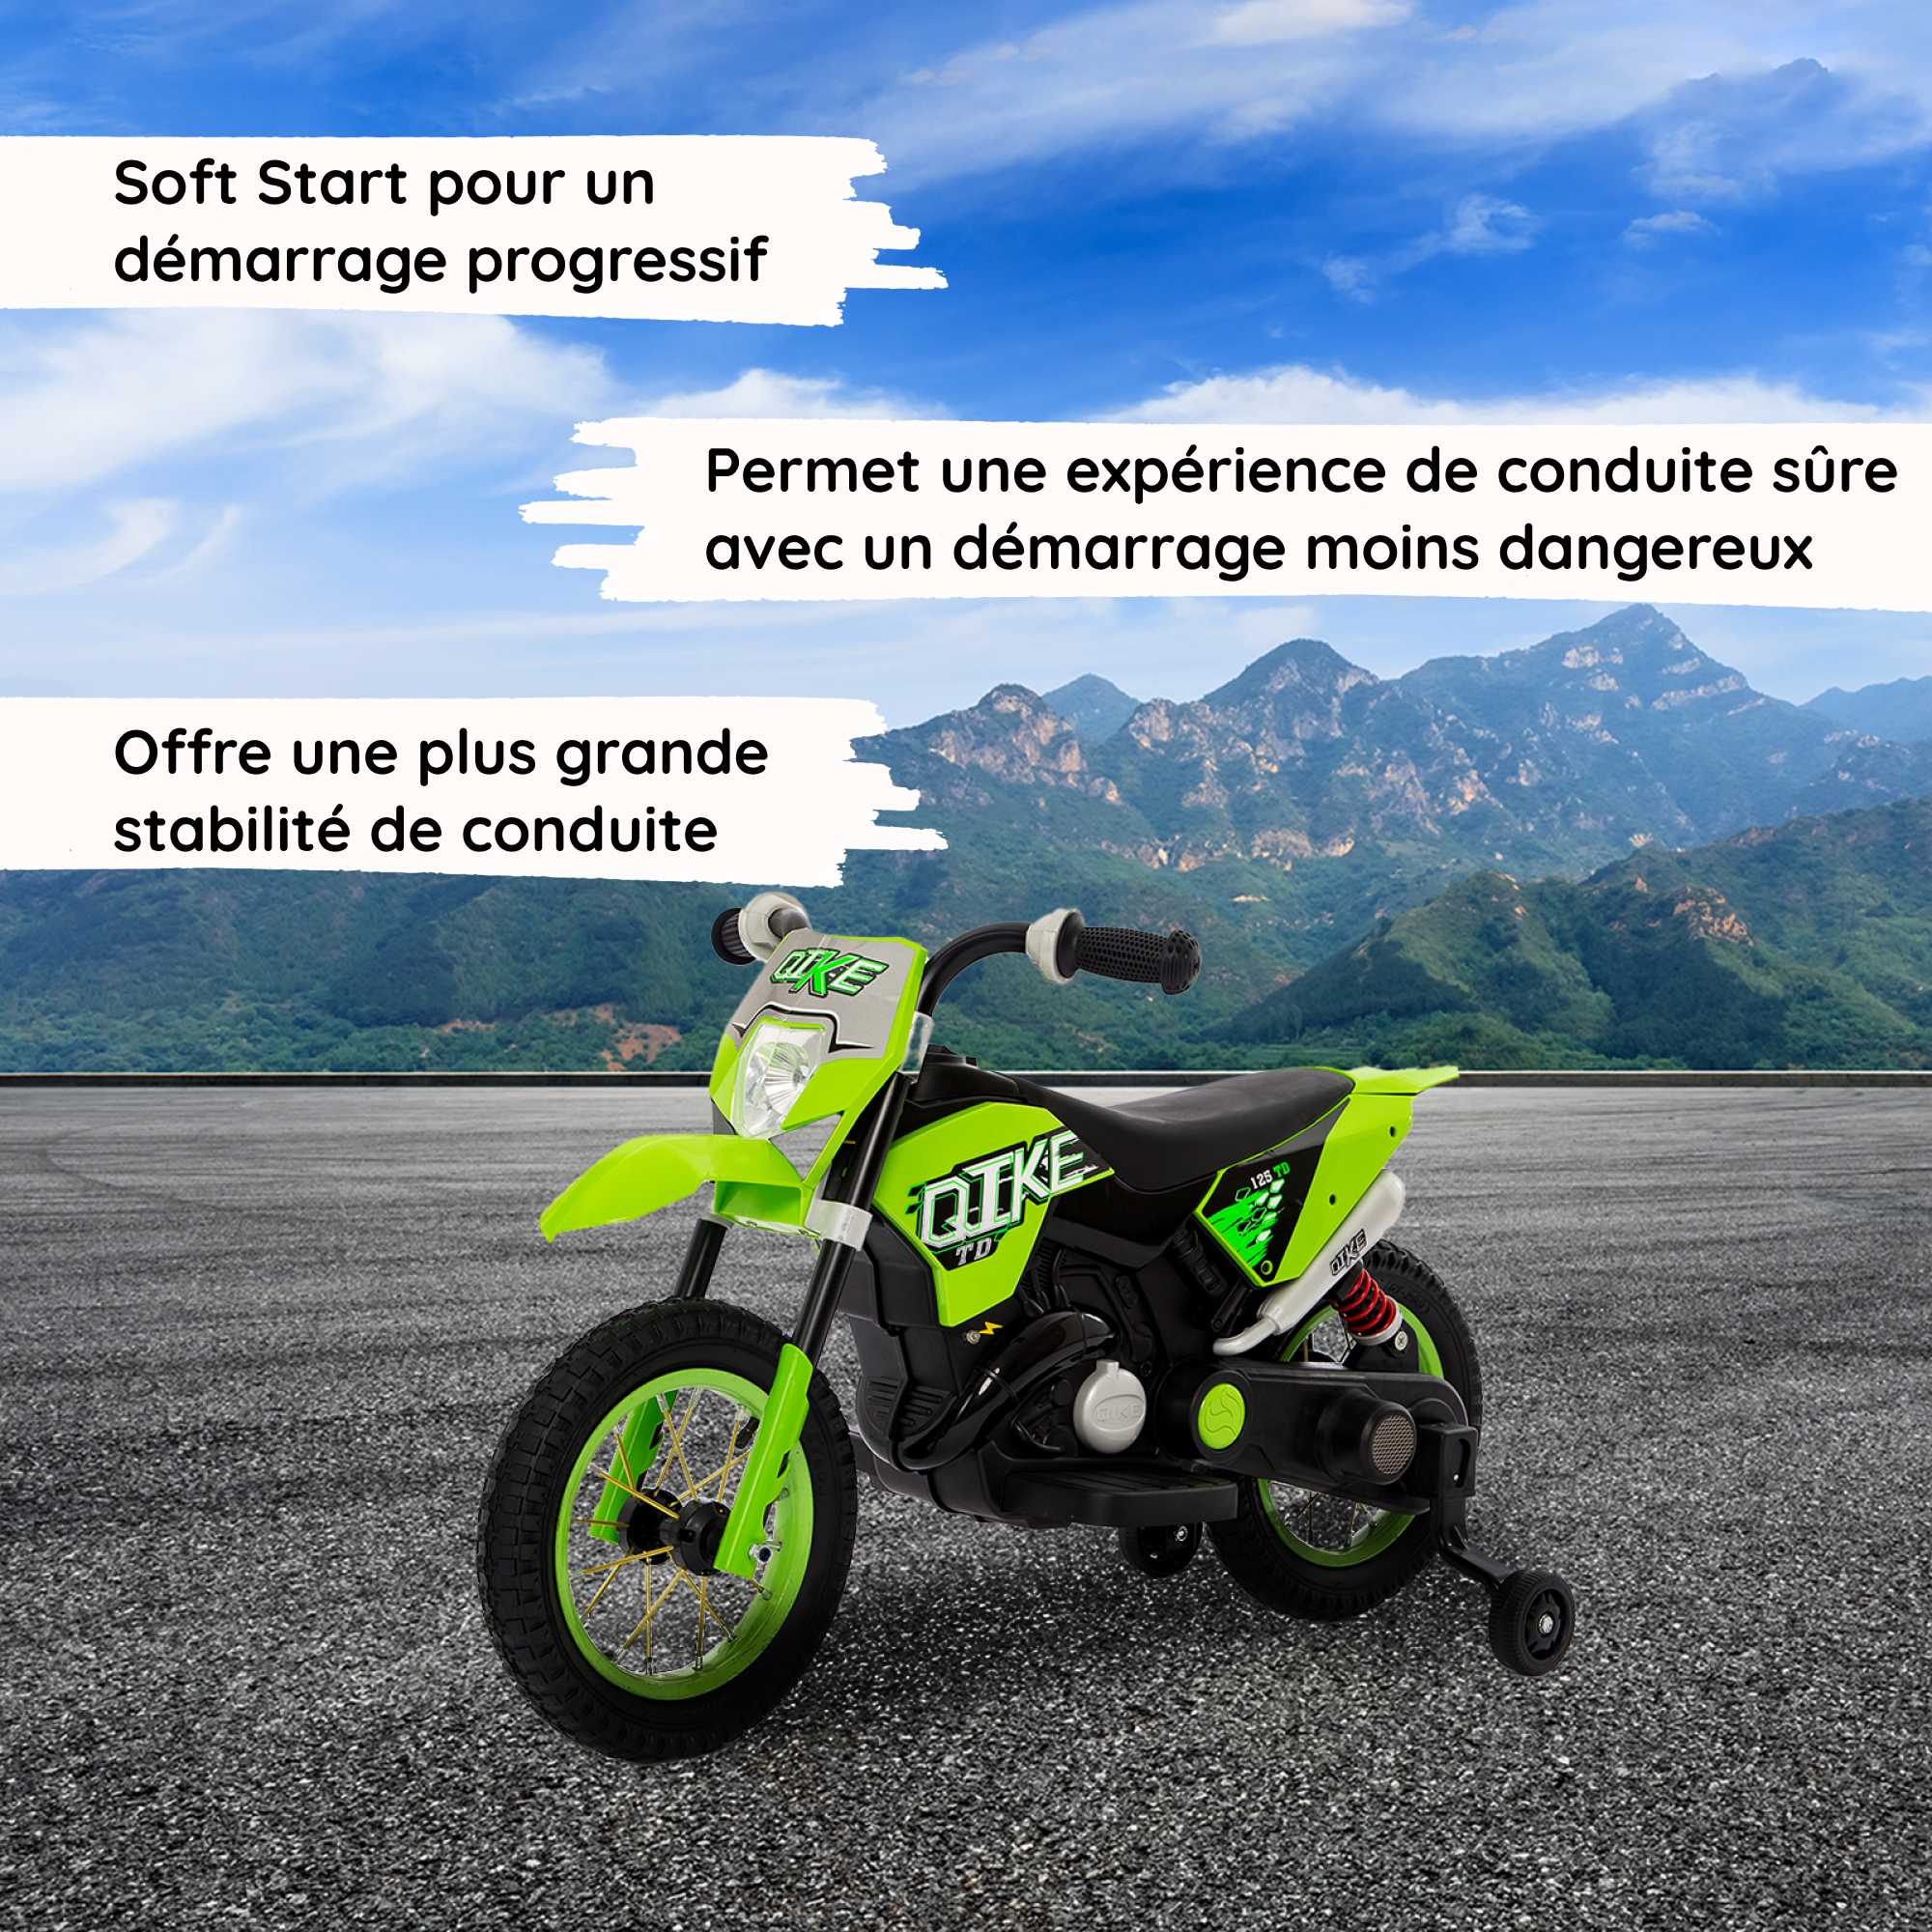 Moto cross vert soft start 